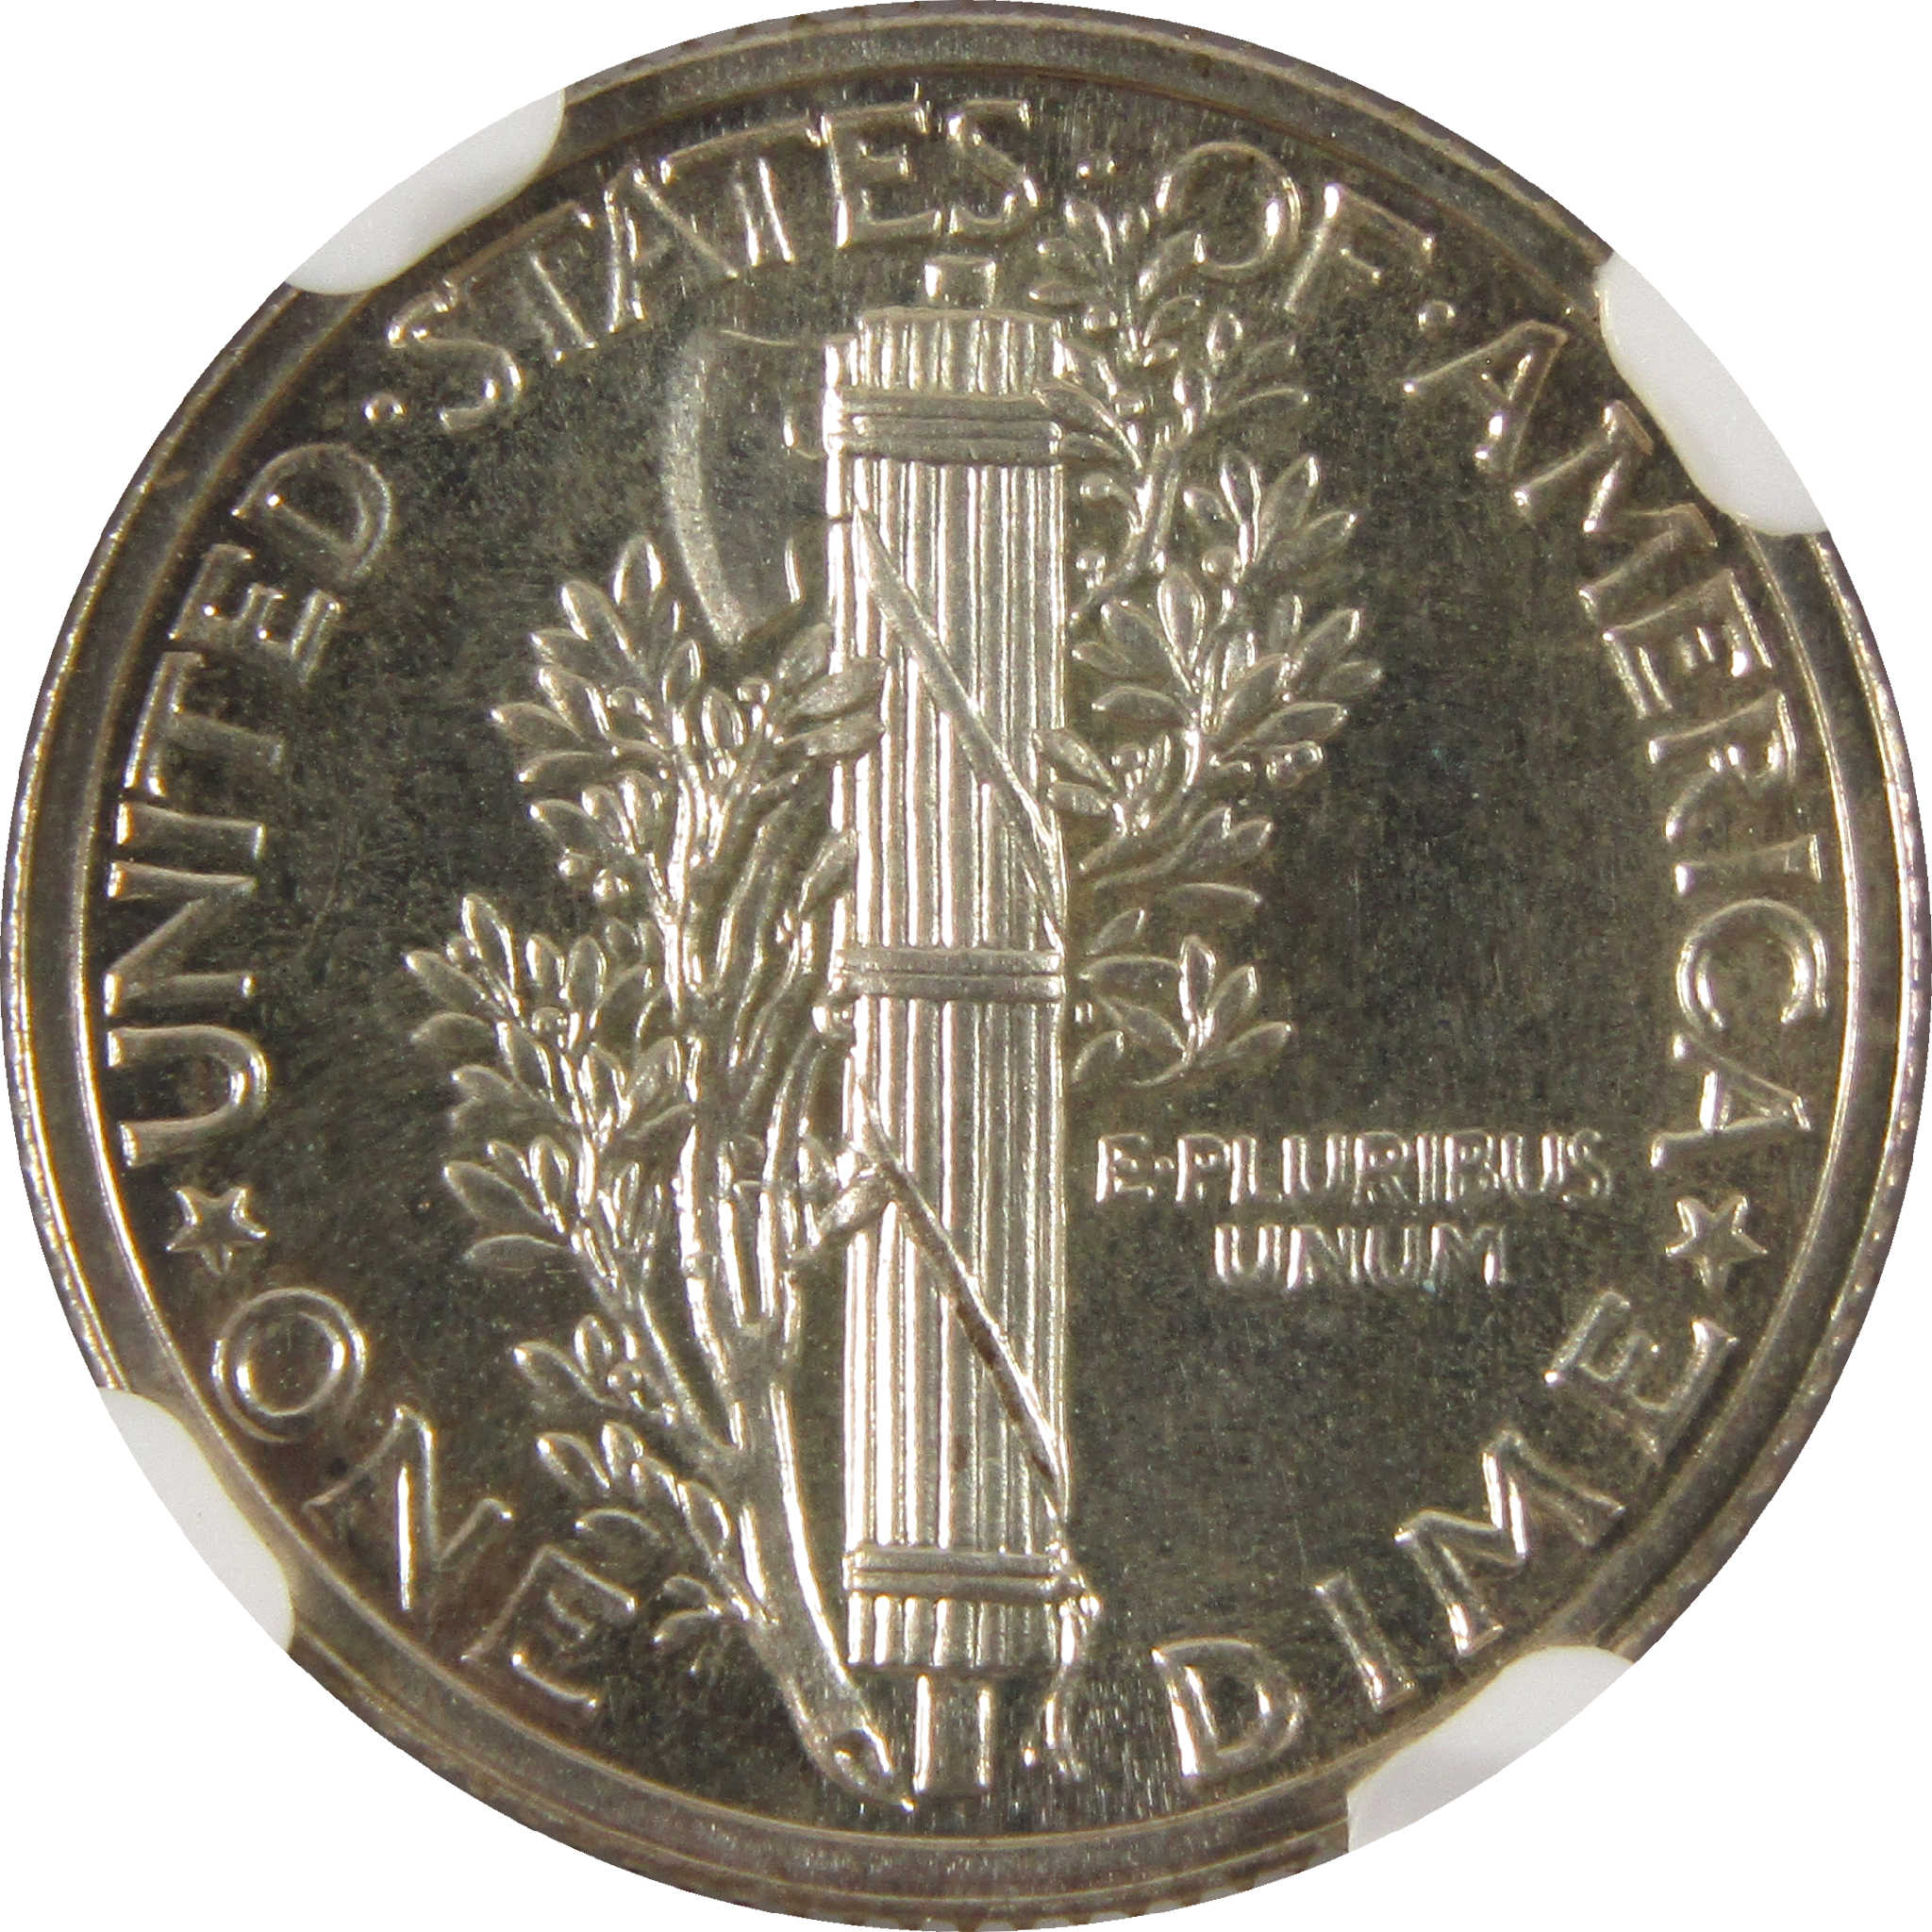 1940 Mercury Dime PF 66 NGC Silver 10c Proof Coin SKU:CPC6380